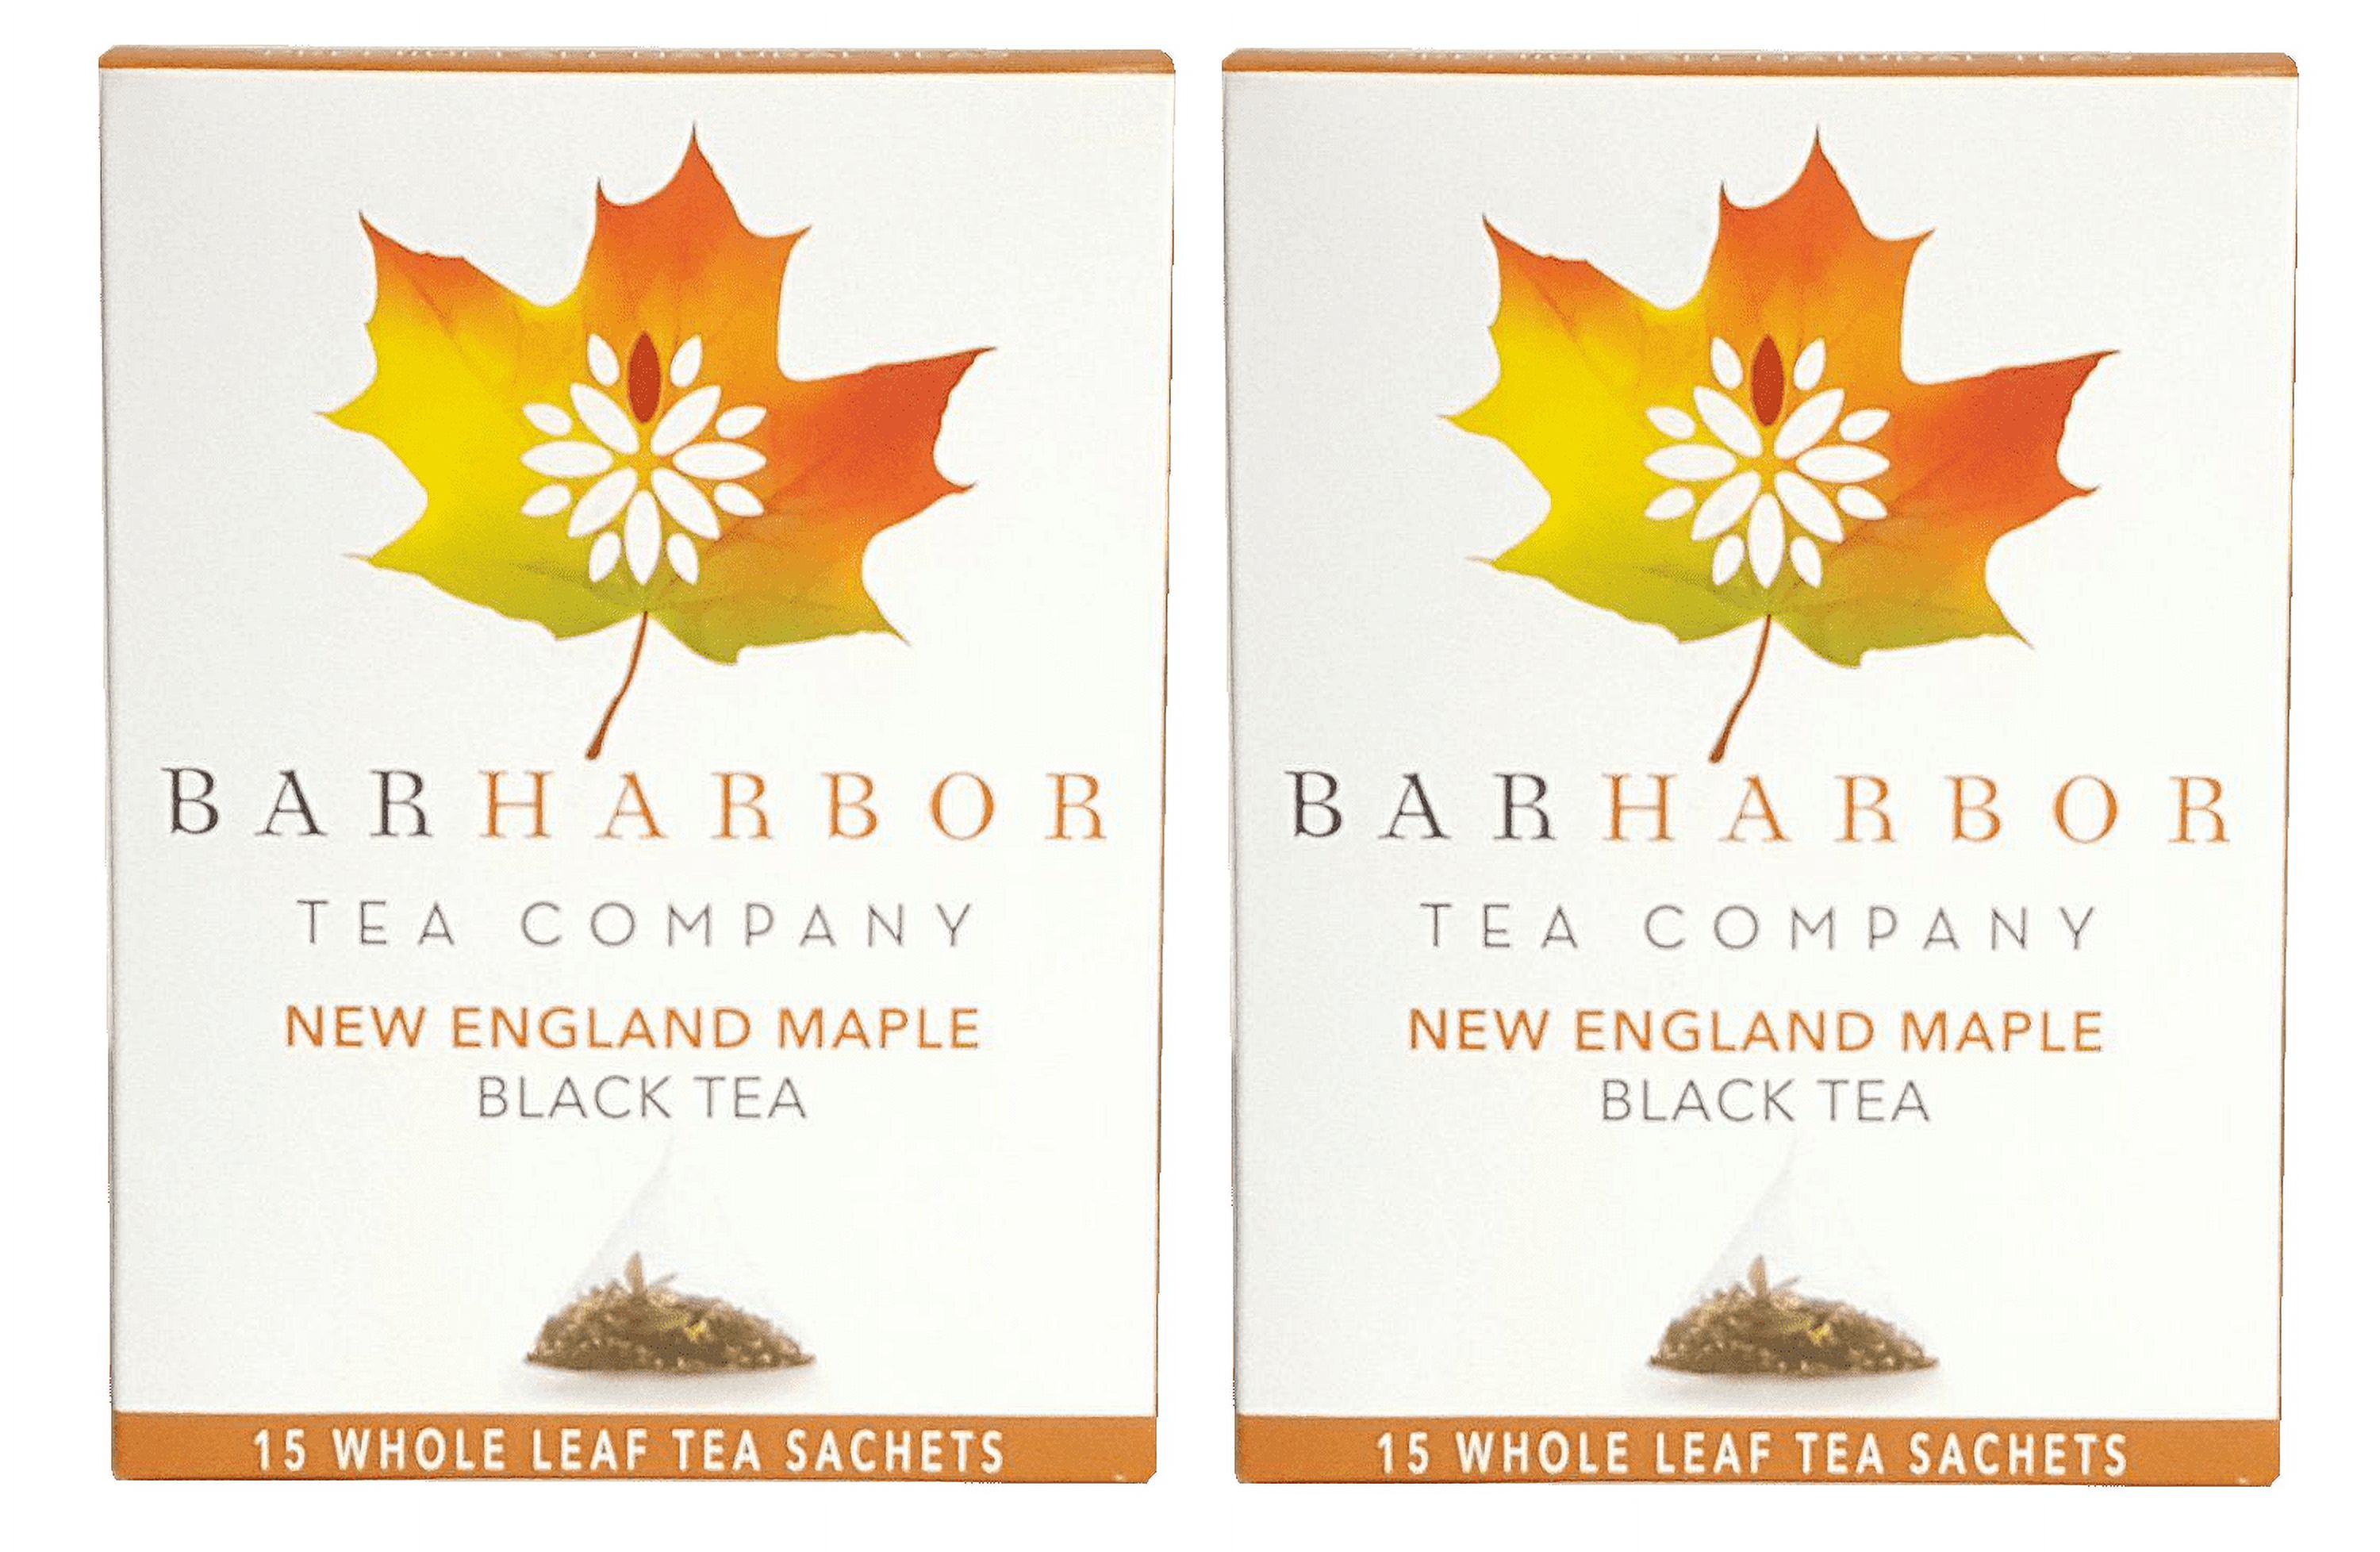 Bar Harbor Tea Company New England Maple Tea - 2 pack, 30 count, Tea bags - image 1 of 3